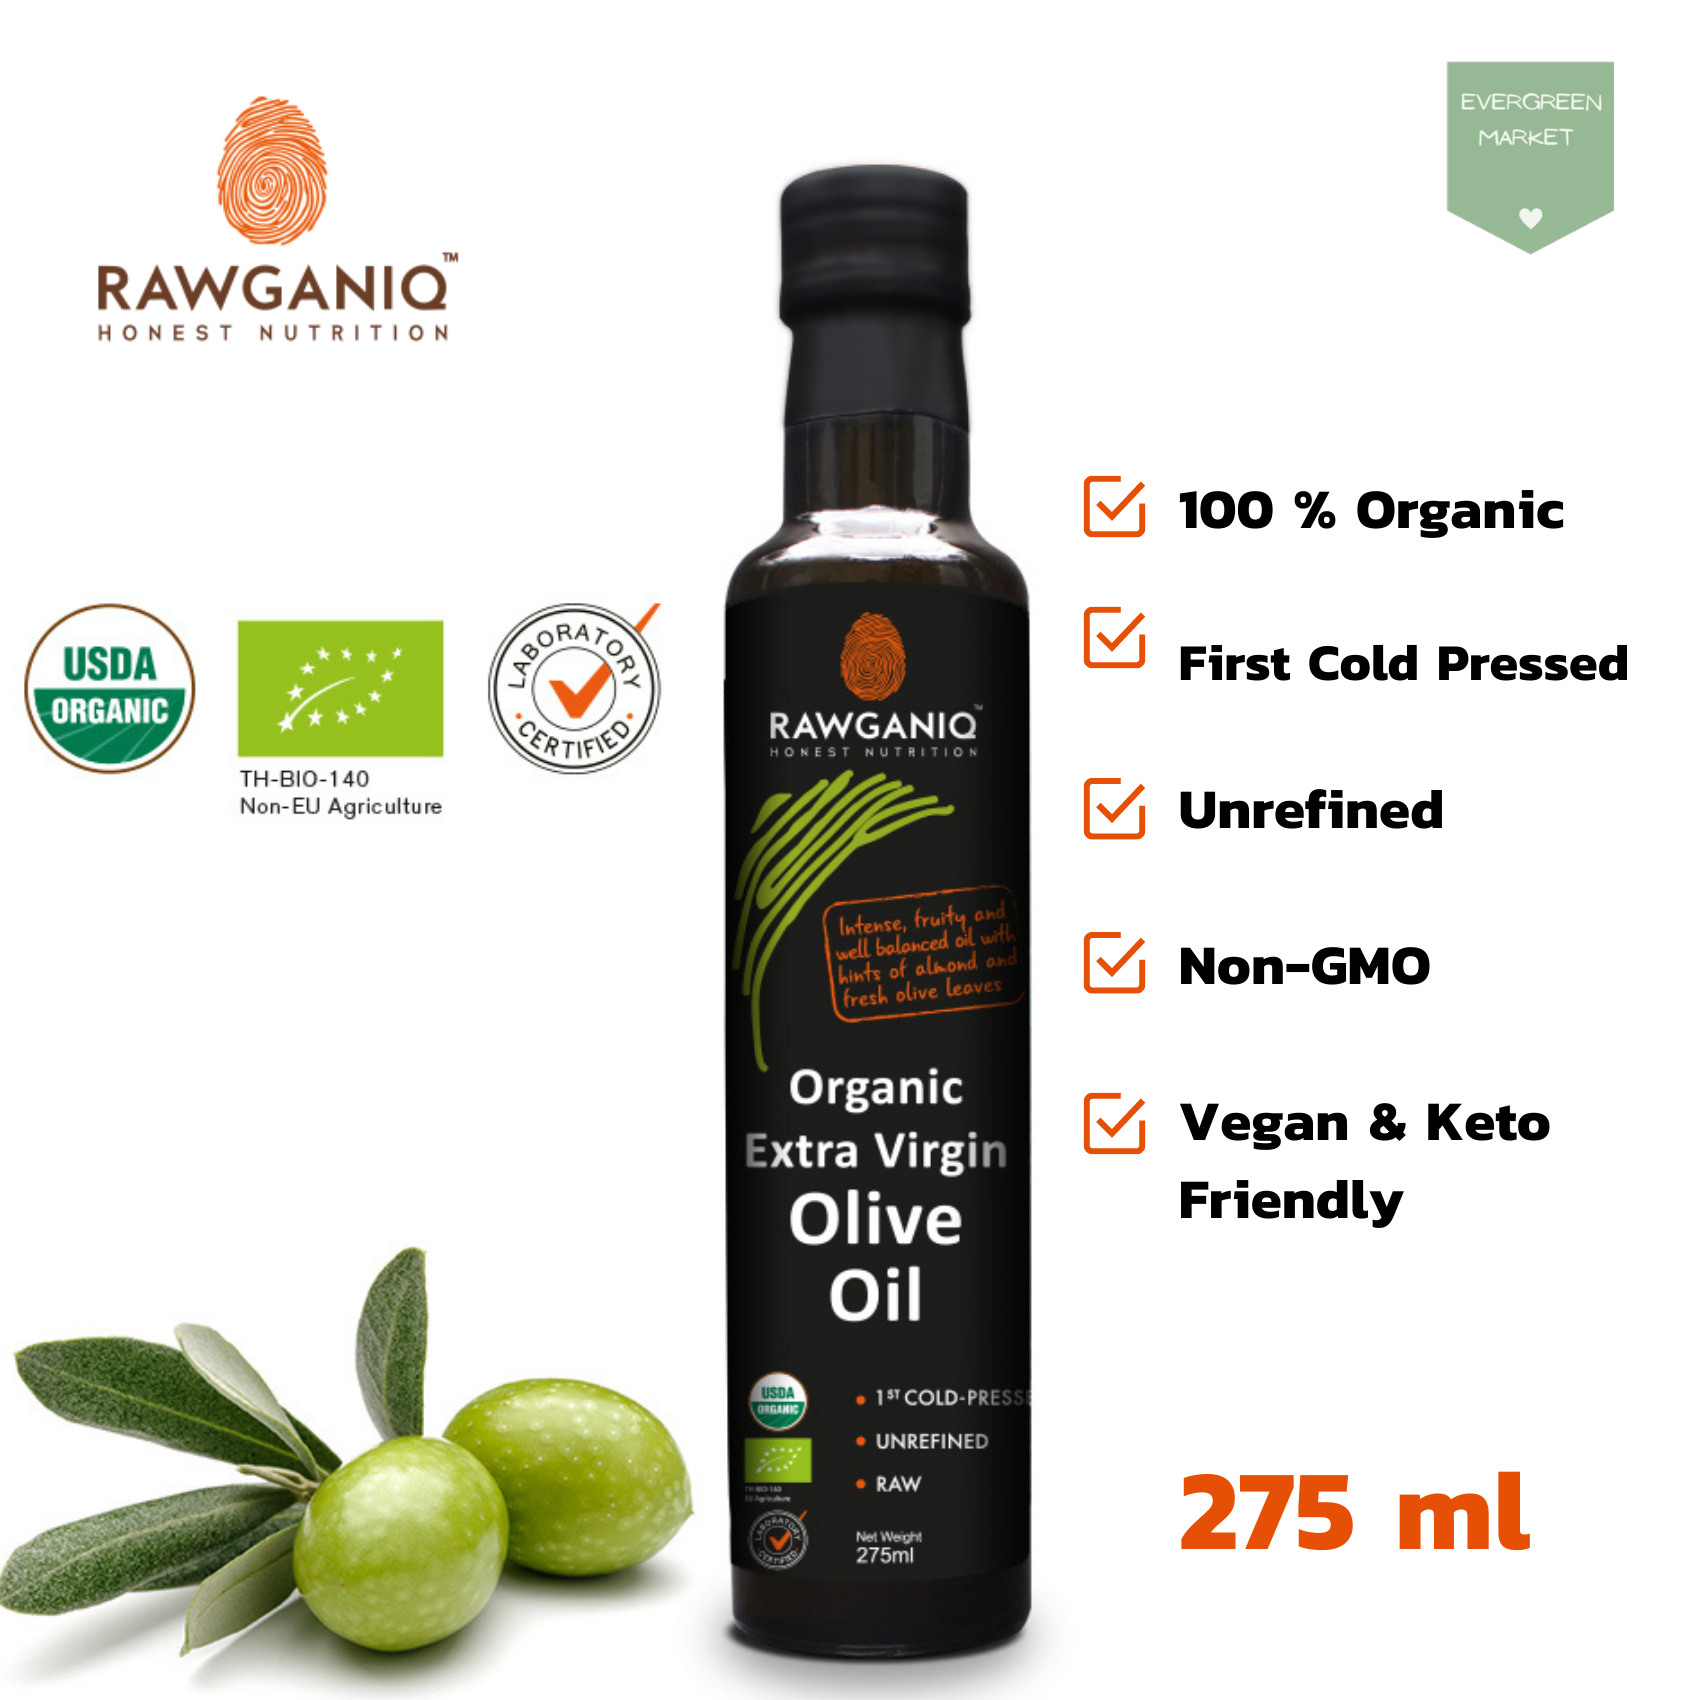 Rawganiq น้ำมันมะกอกสกัดเย็นออร์แกนิค (ขนาดบรรจุ 275 ml) Organic Extra Virgin Olive Oil ผลิตด้วยกรรมวิธีสกัดเย็นหลังจากเก็บเกี่ยว สดใหม่ น้ำมันโอลีฟออย